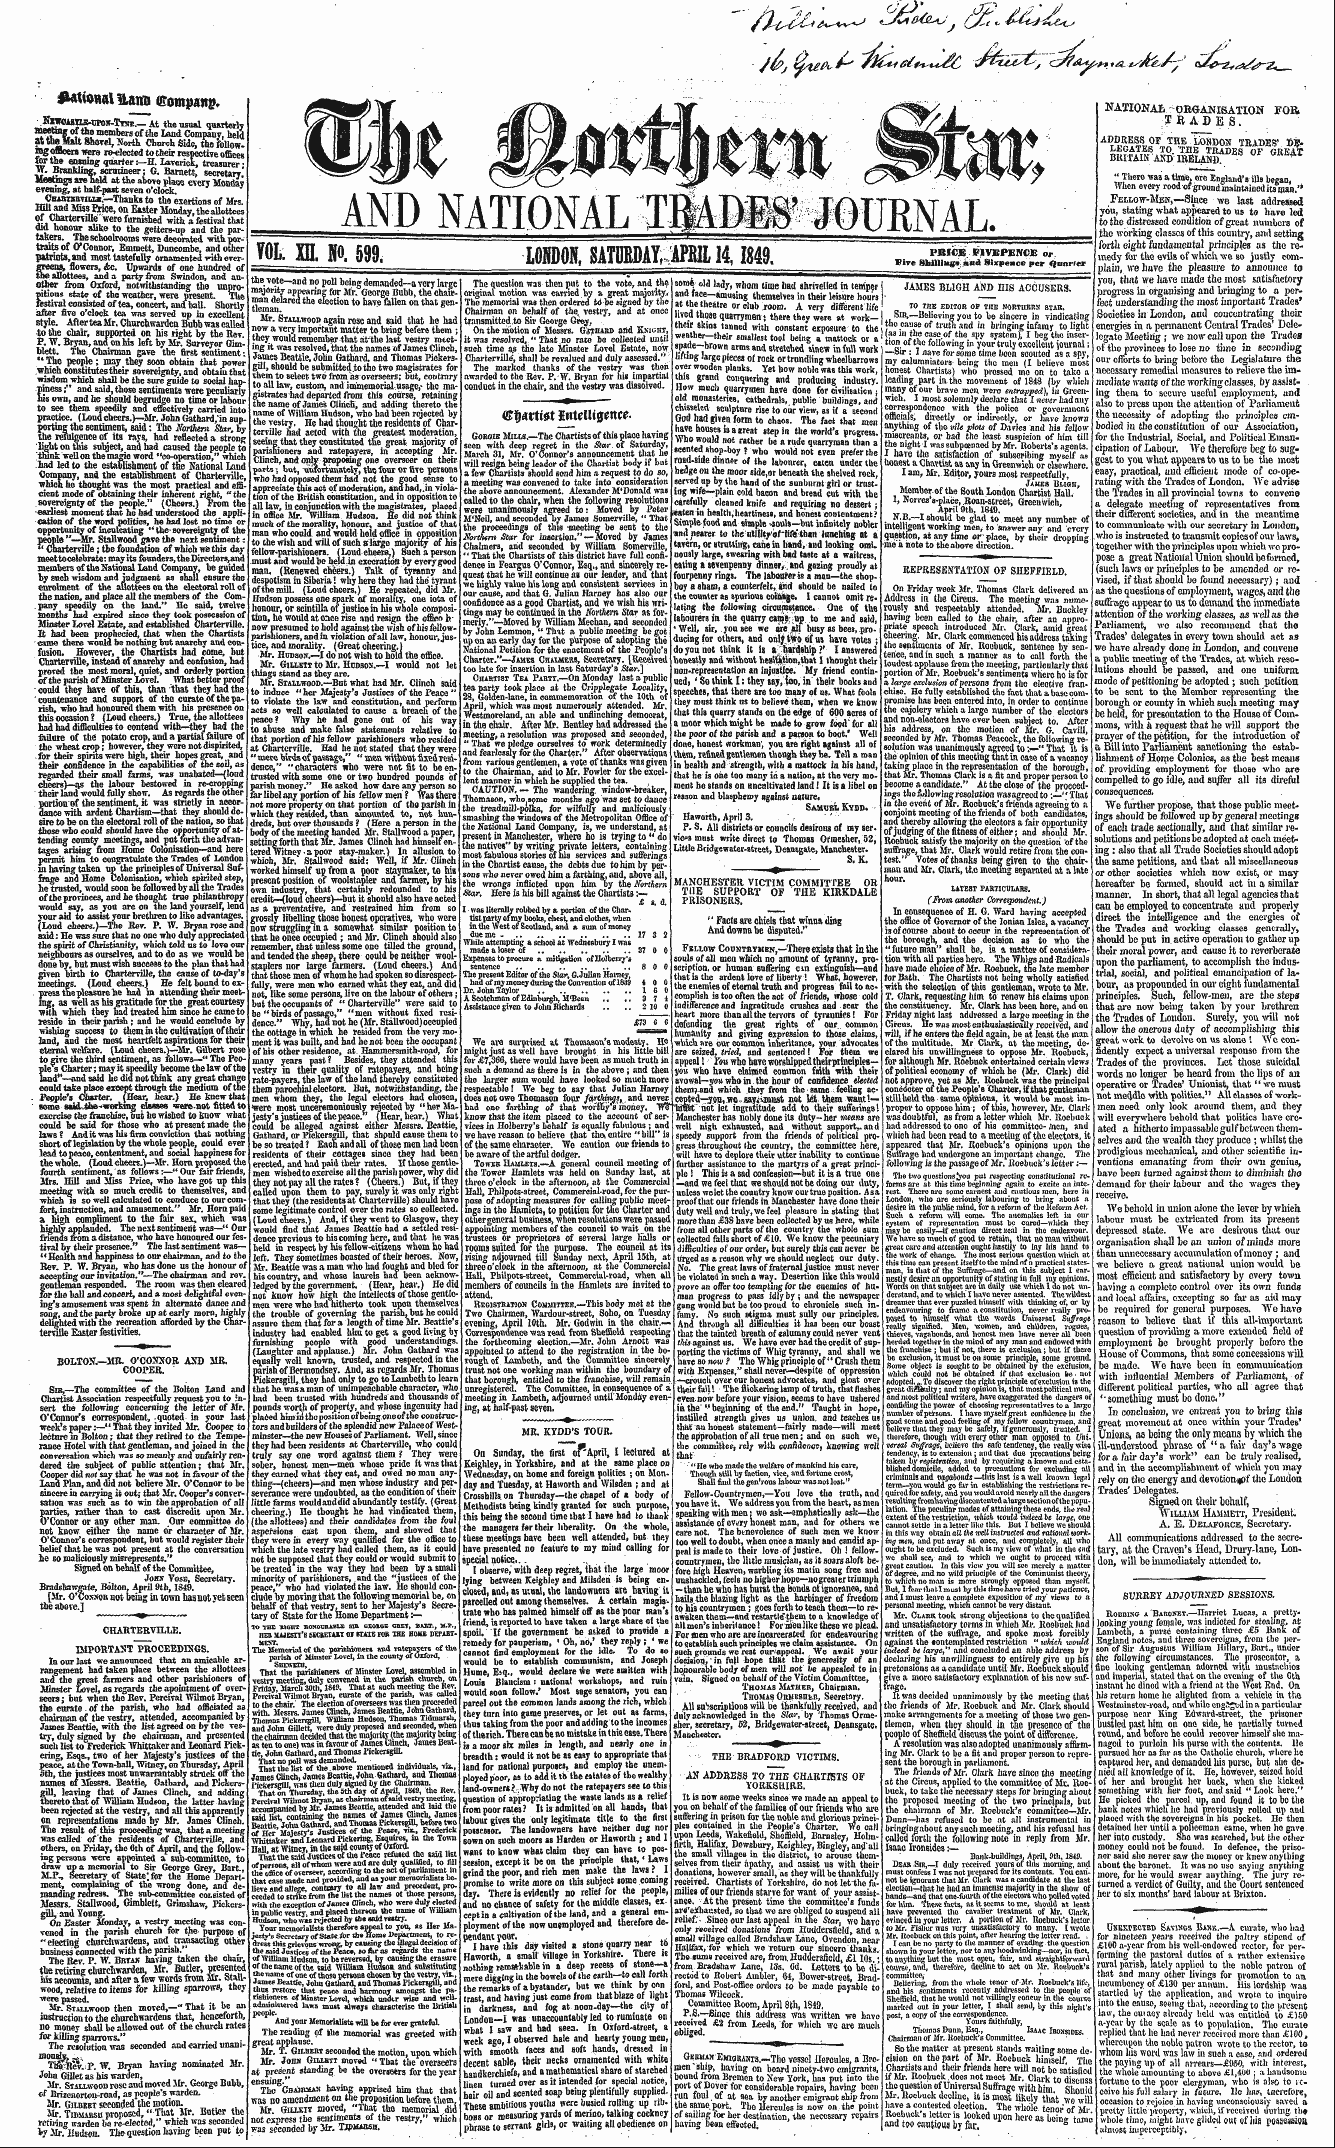 Northern Star (1837-1852): jS F Y, 3rd edition - _Y0l. Xh. P. 599, I0bd0h, Satdsda^Pbil 1...